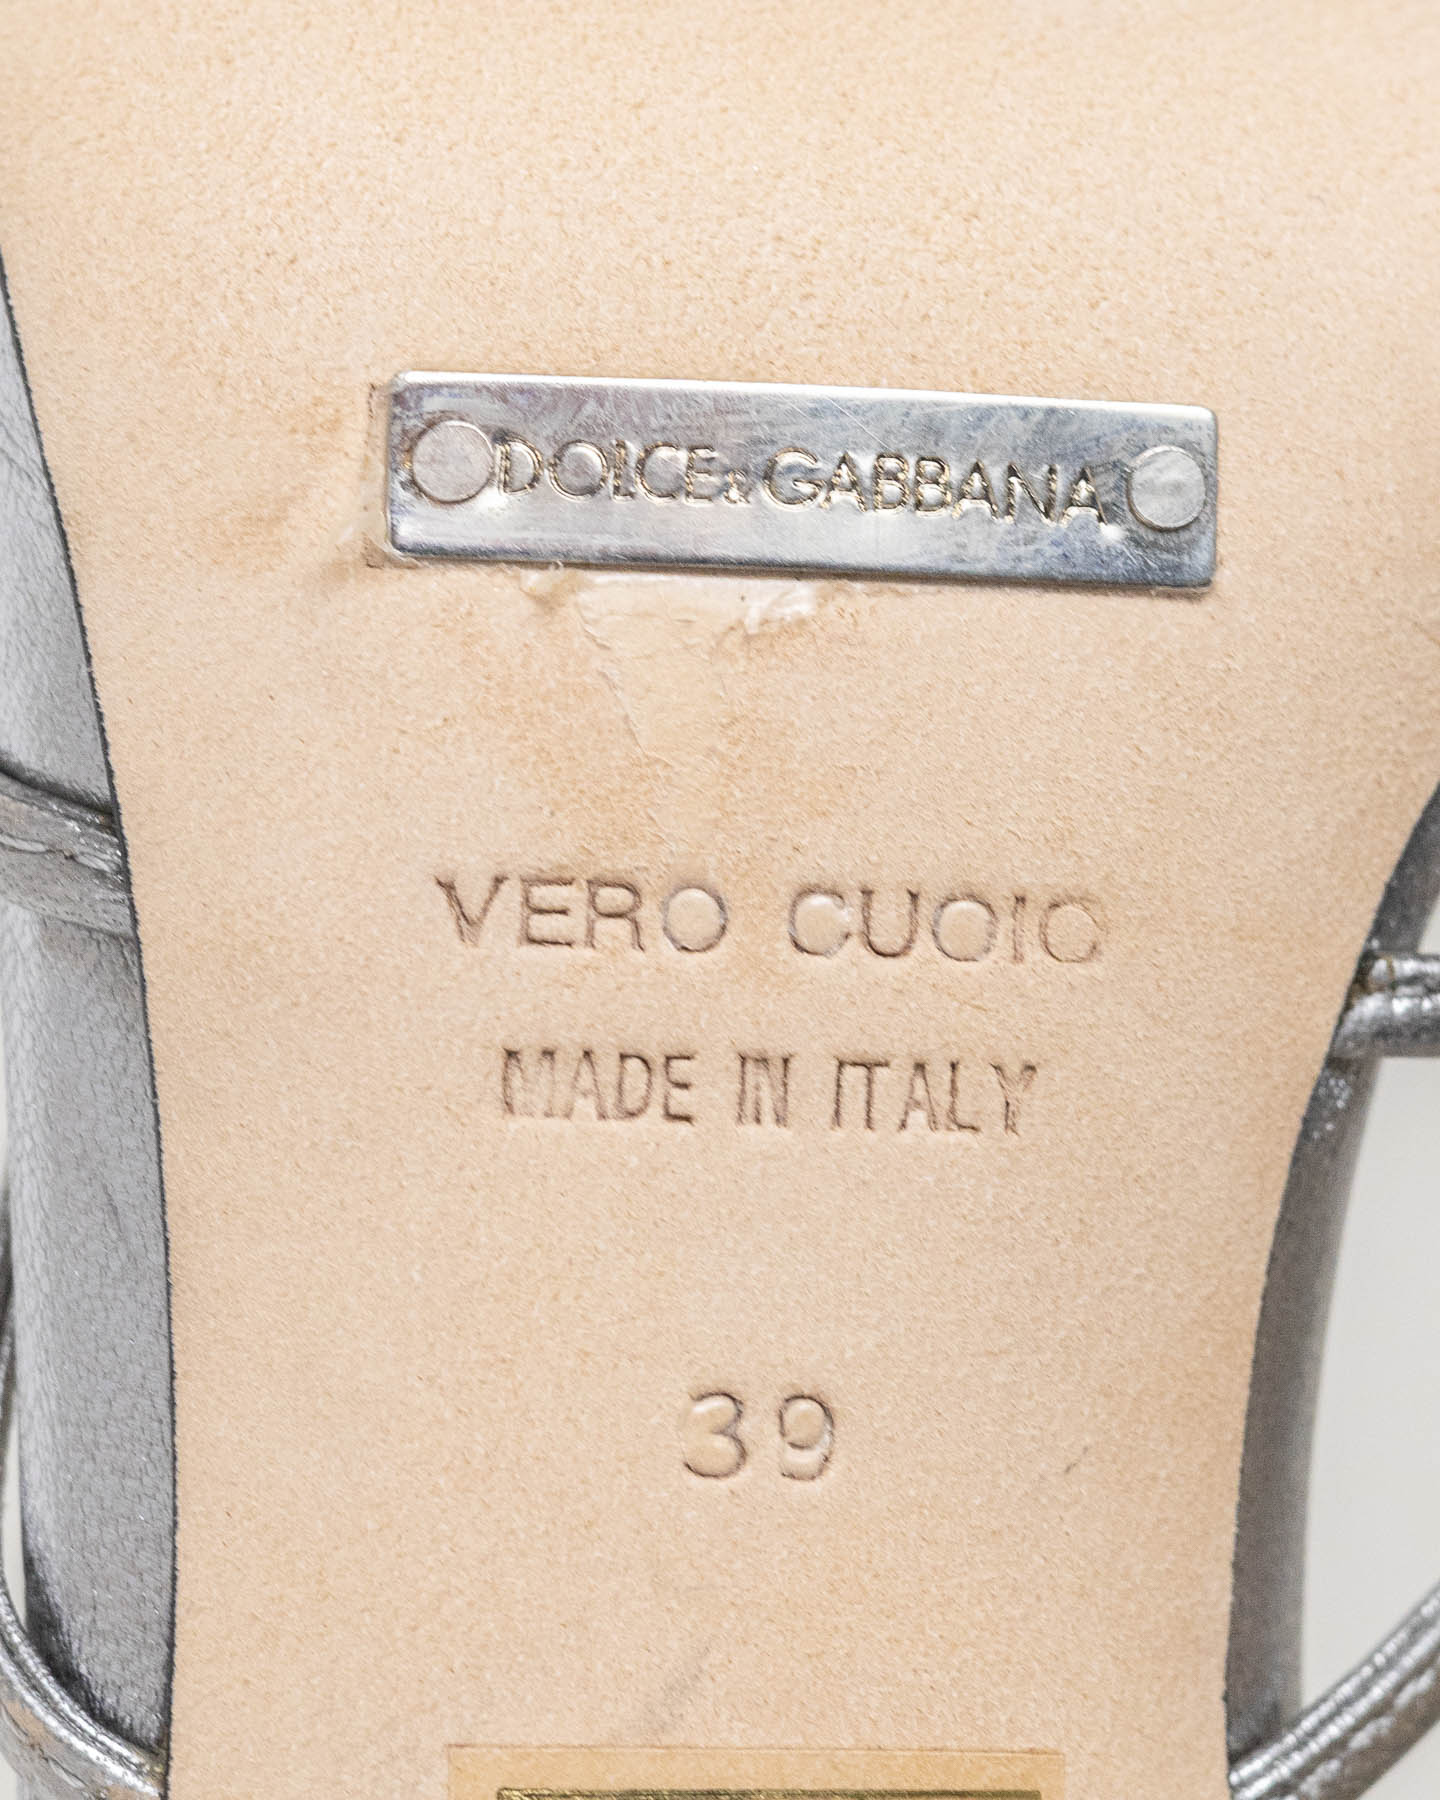 Dolce&Gabbana Silver Heels - size 39.5